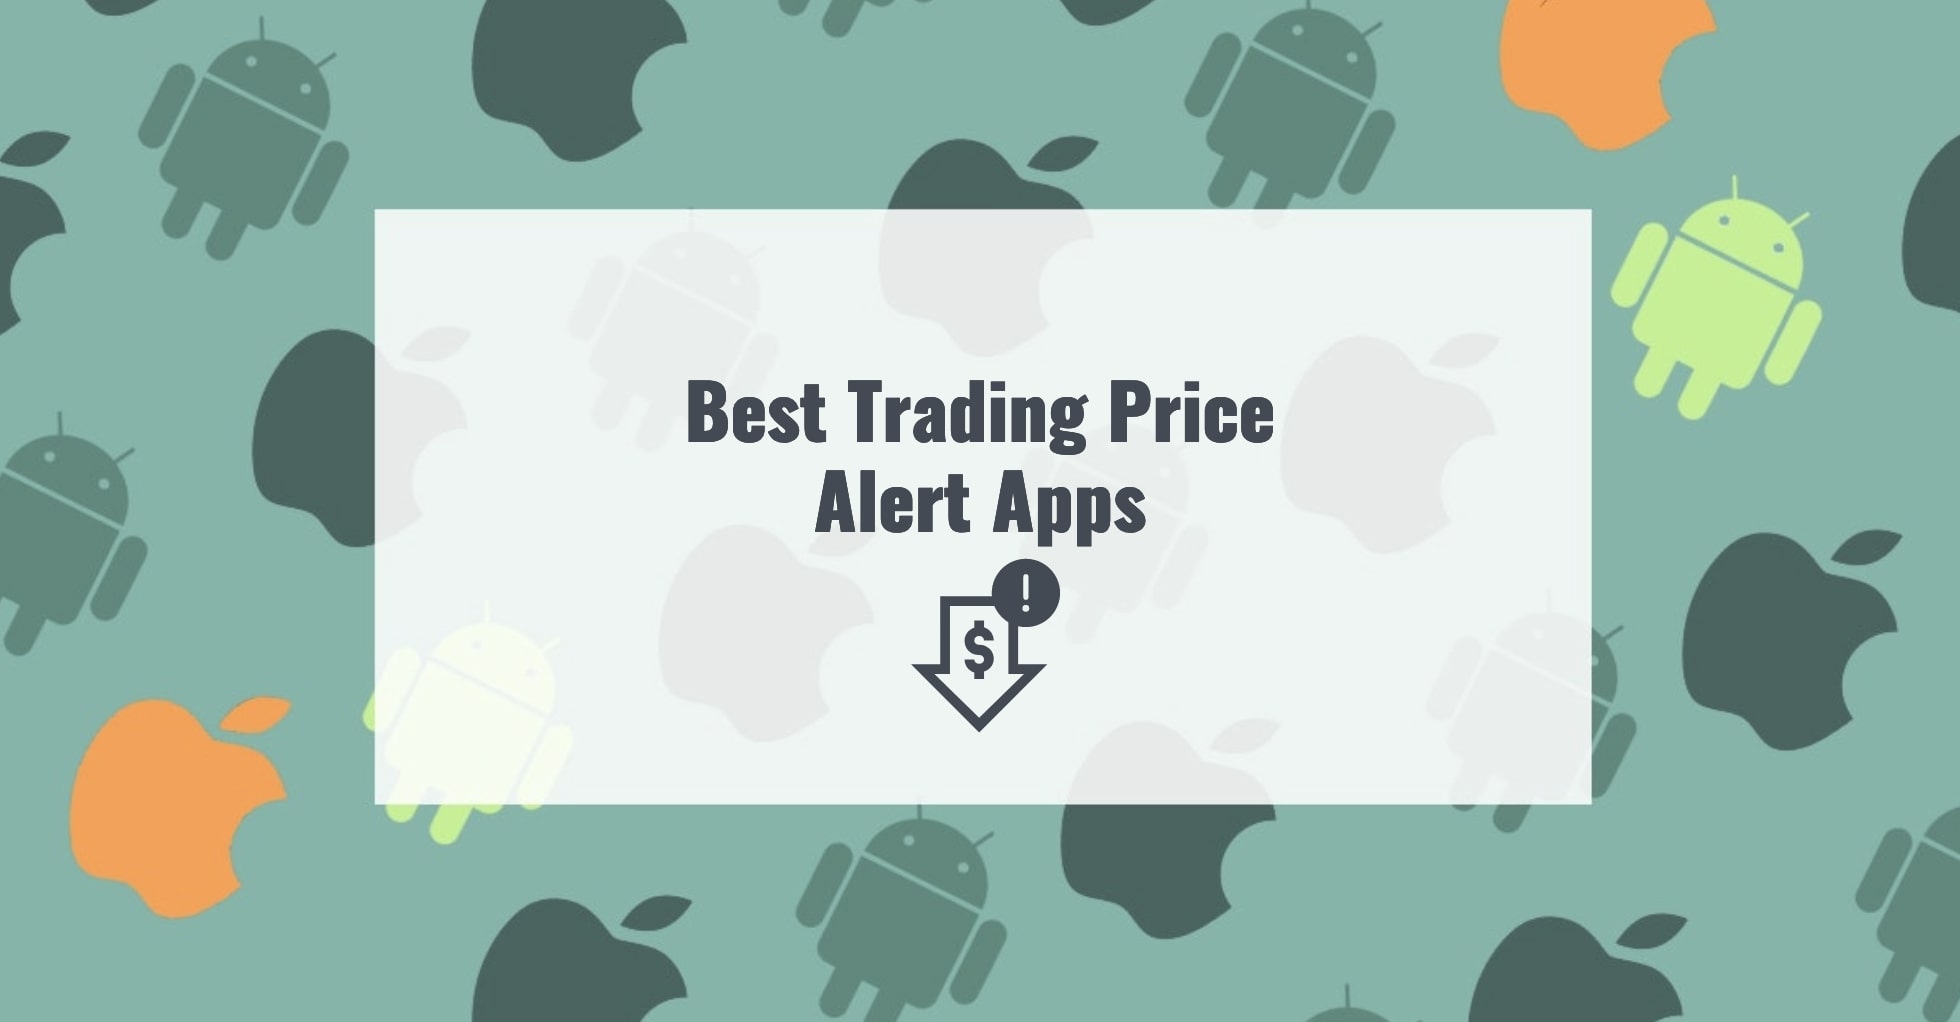 Best Trading Price Alert Apps